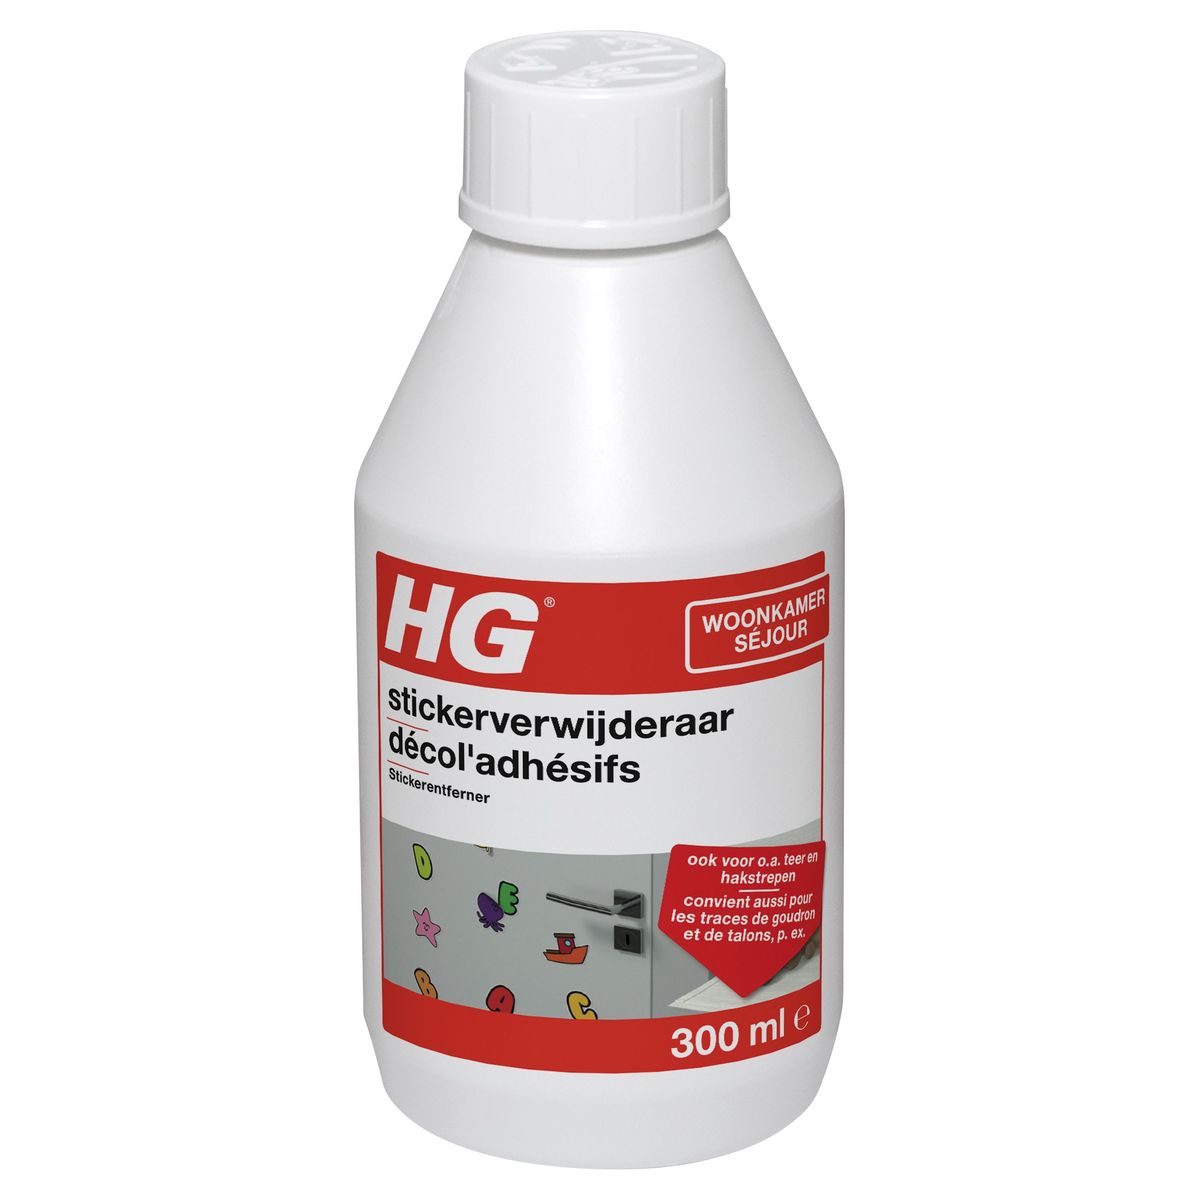 HG Woonkamer Stickerverwijderaar 300 ml